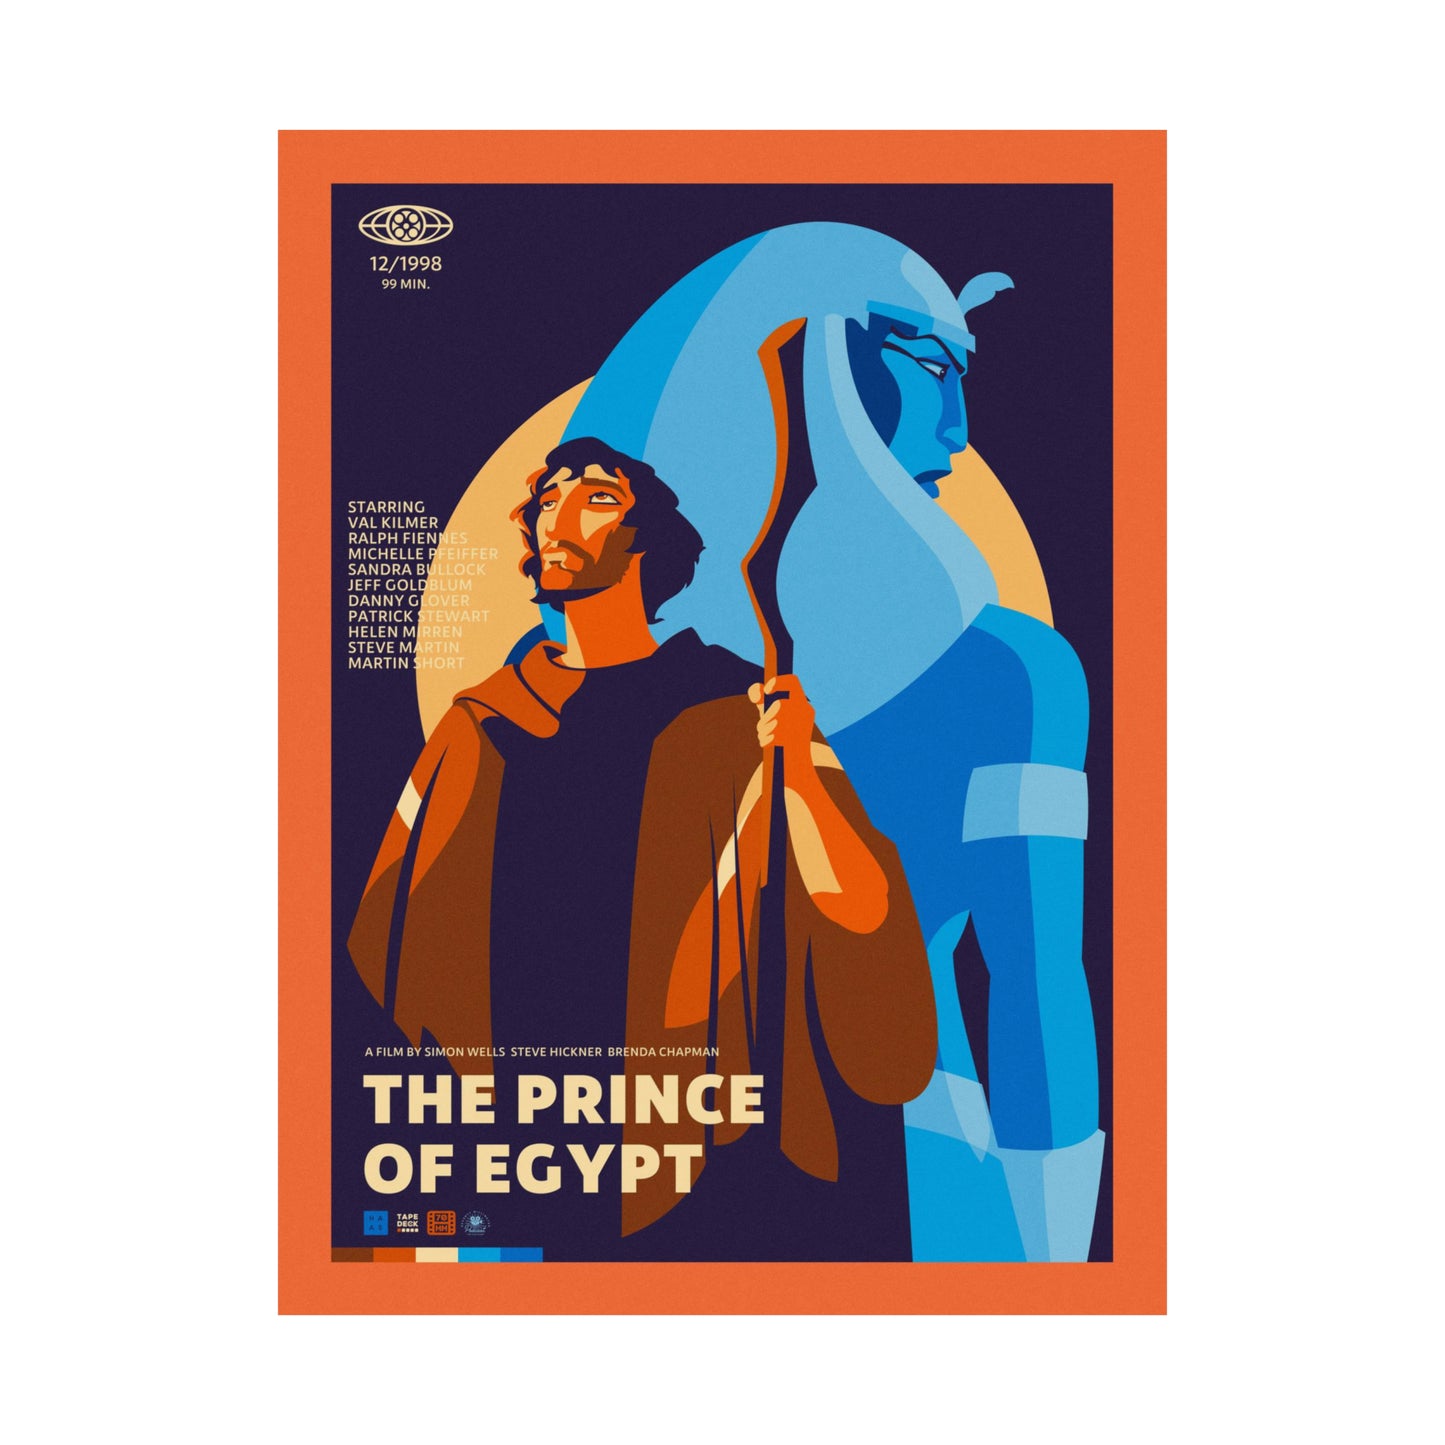 Bonus Episode: The Prince of Egypt